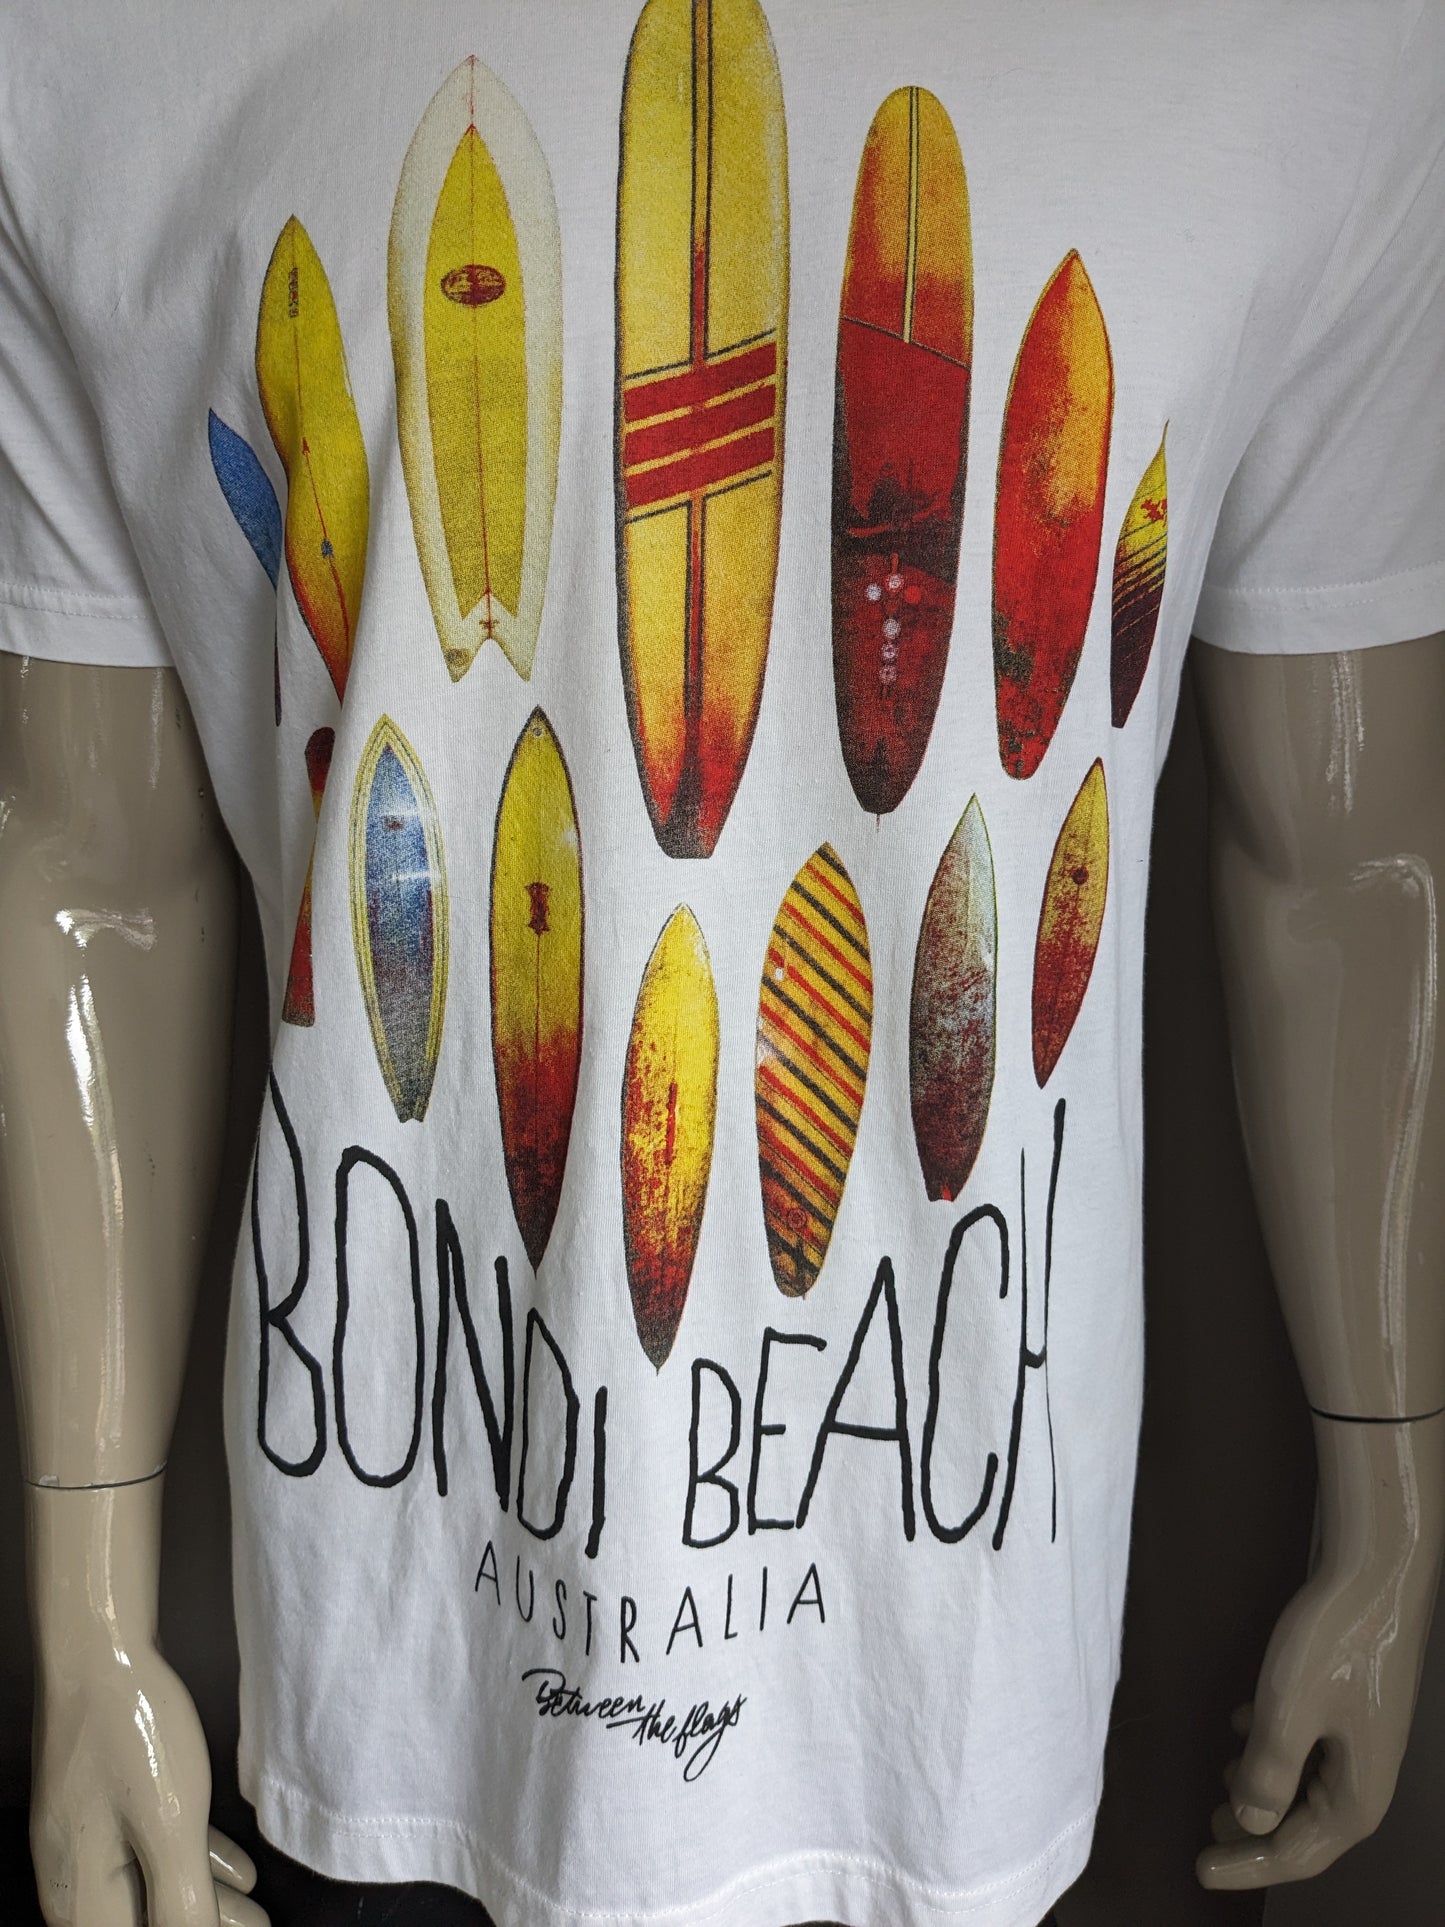 Between the flags "Bondi Beach" shirt. White with print. Size XL.